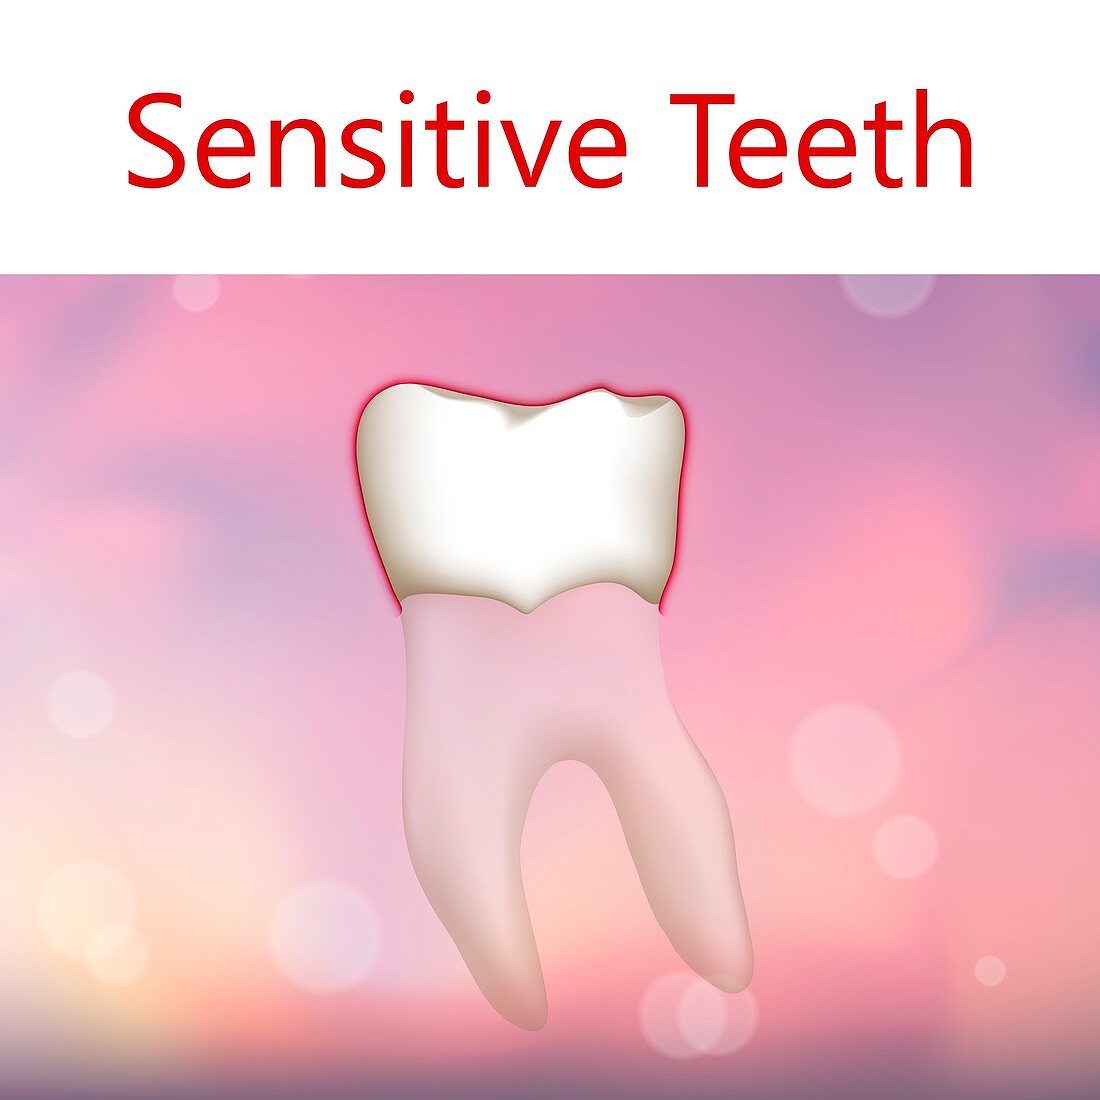 Sensitive tooth, illustration